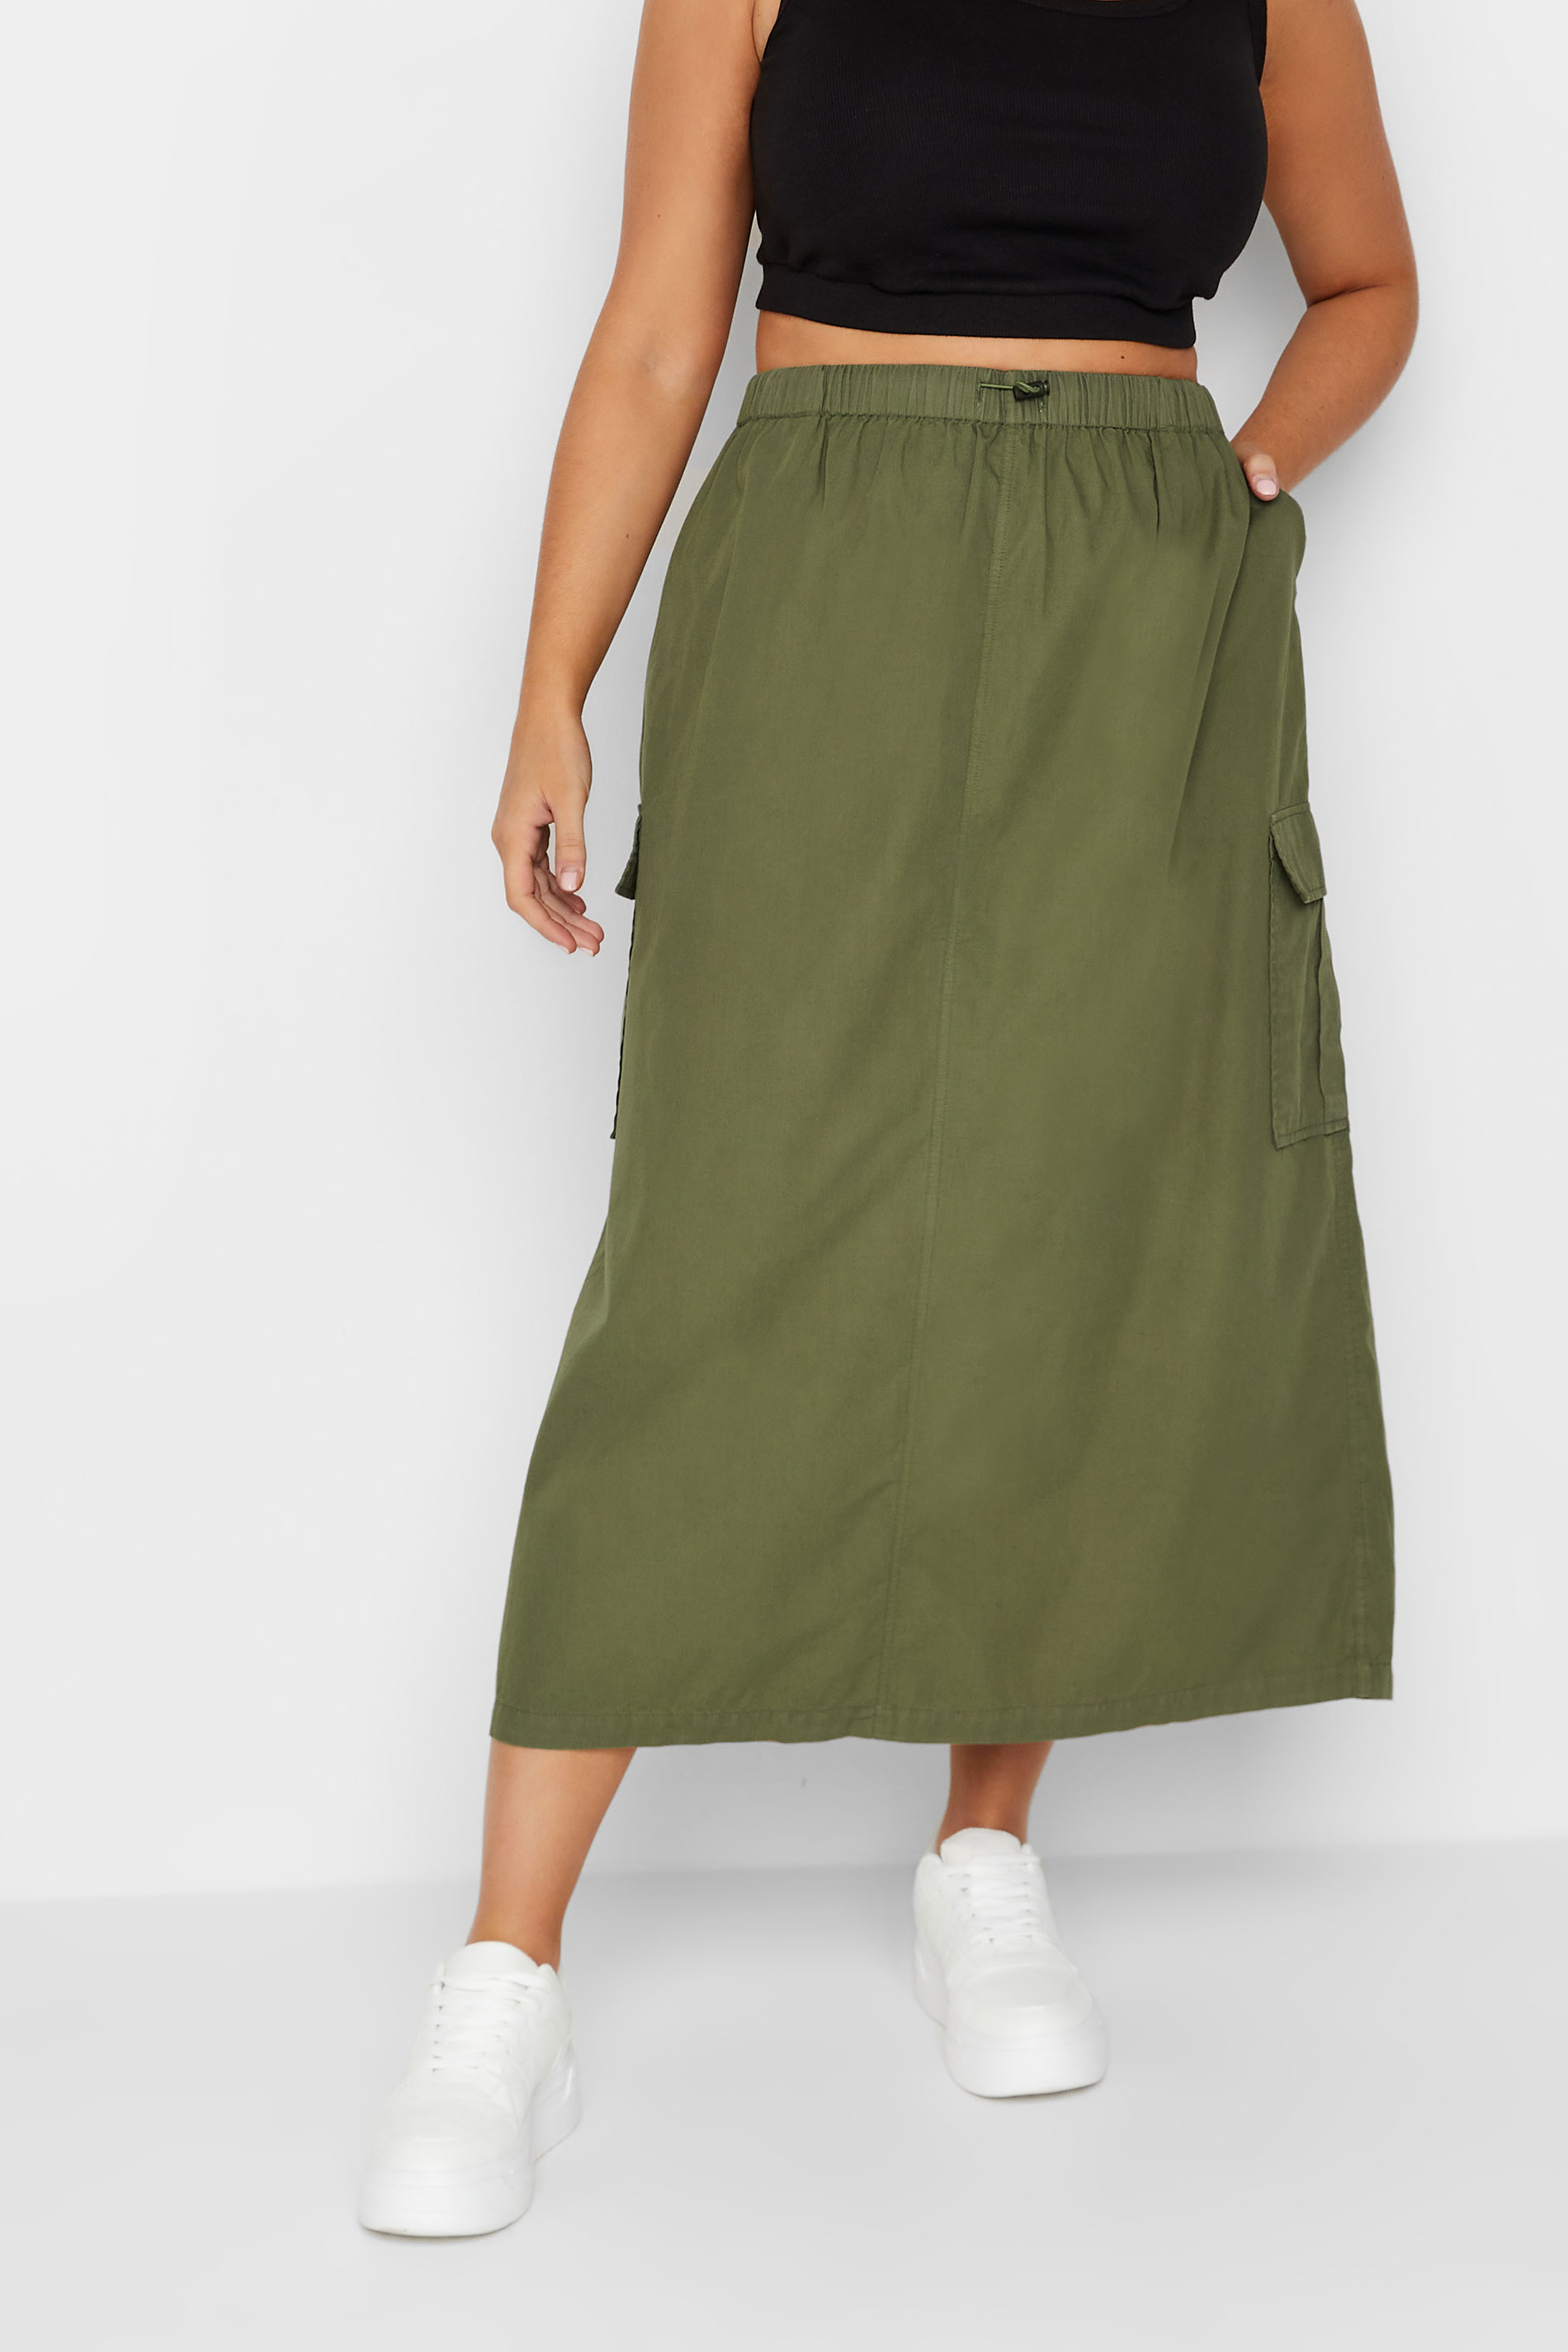 Buy lwtihsth Plus Size Women Skirts Summer Floral Print A Line Mini Skirts  High Waist Flared Skater Short Skirt Dark Green at Amazonin